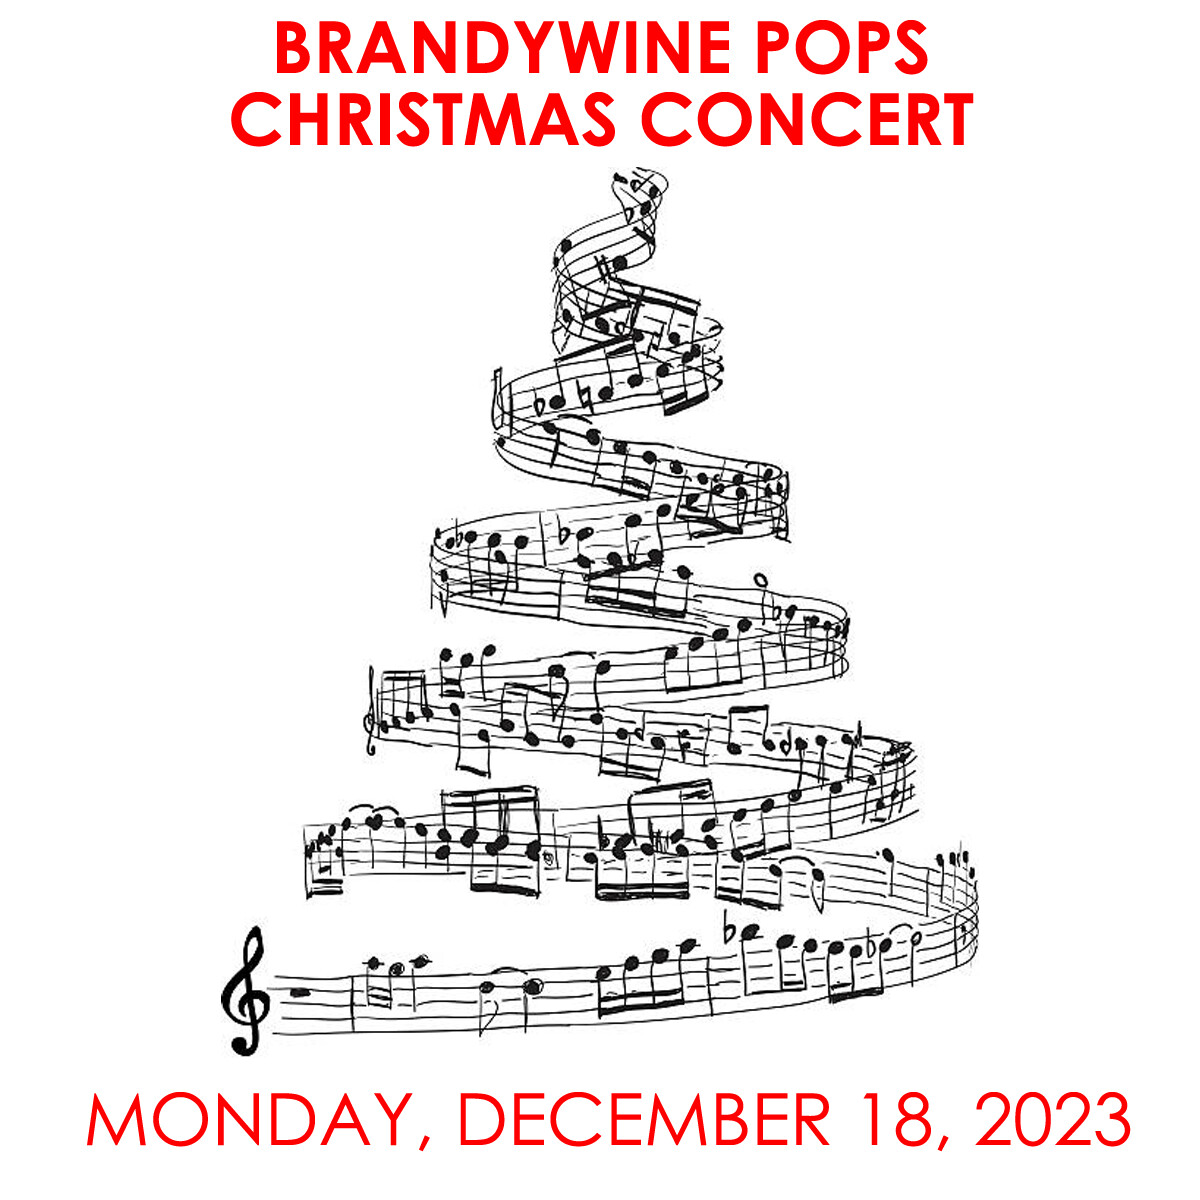 Brandywine Pops Christmas Concert